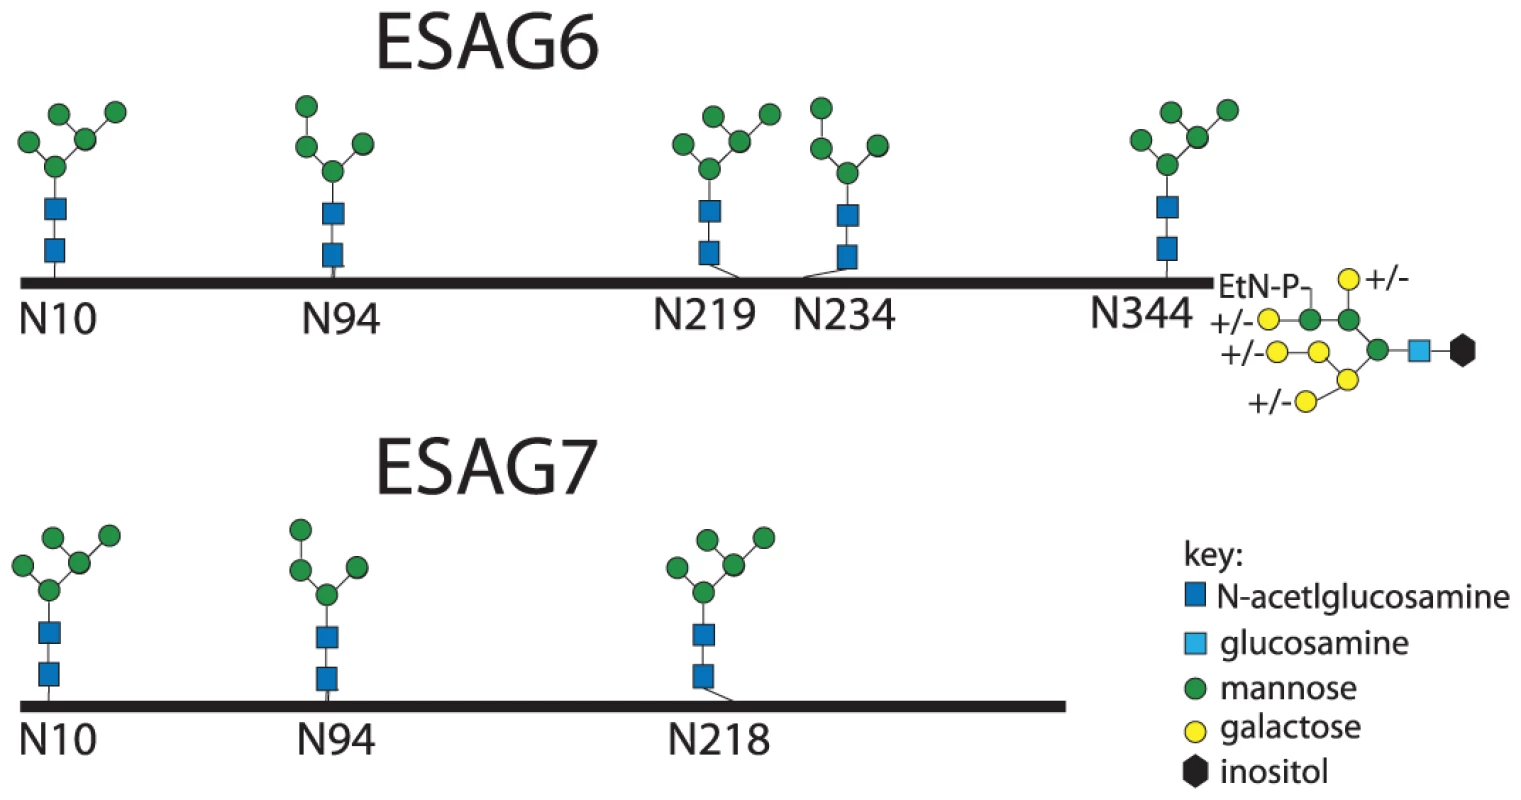 Glycosylation patterns of ESAG6 and ESAG7.